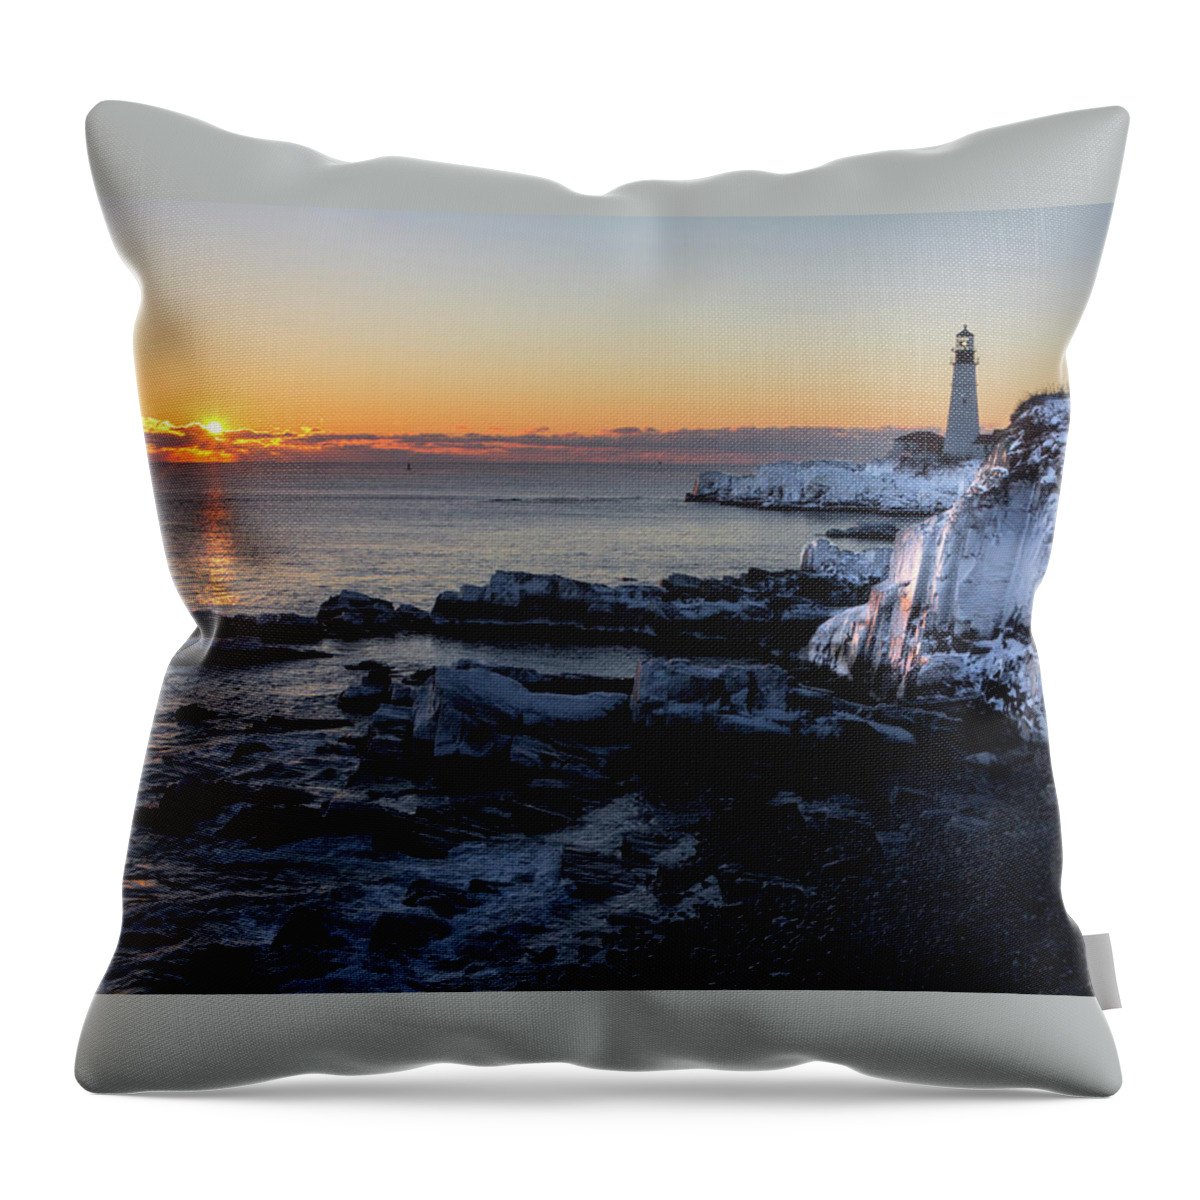 Sun Throw Pillow featuring the photograph Sunrise Reflection by Darryl Hendricks